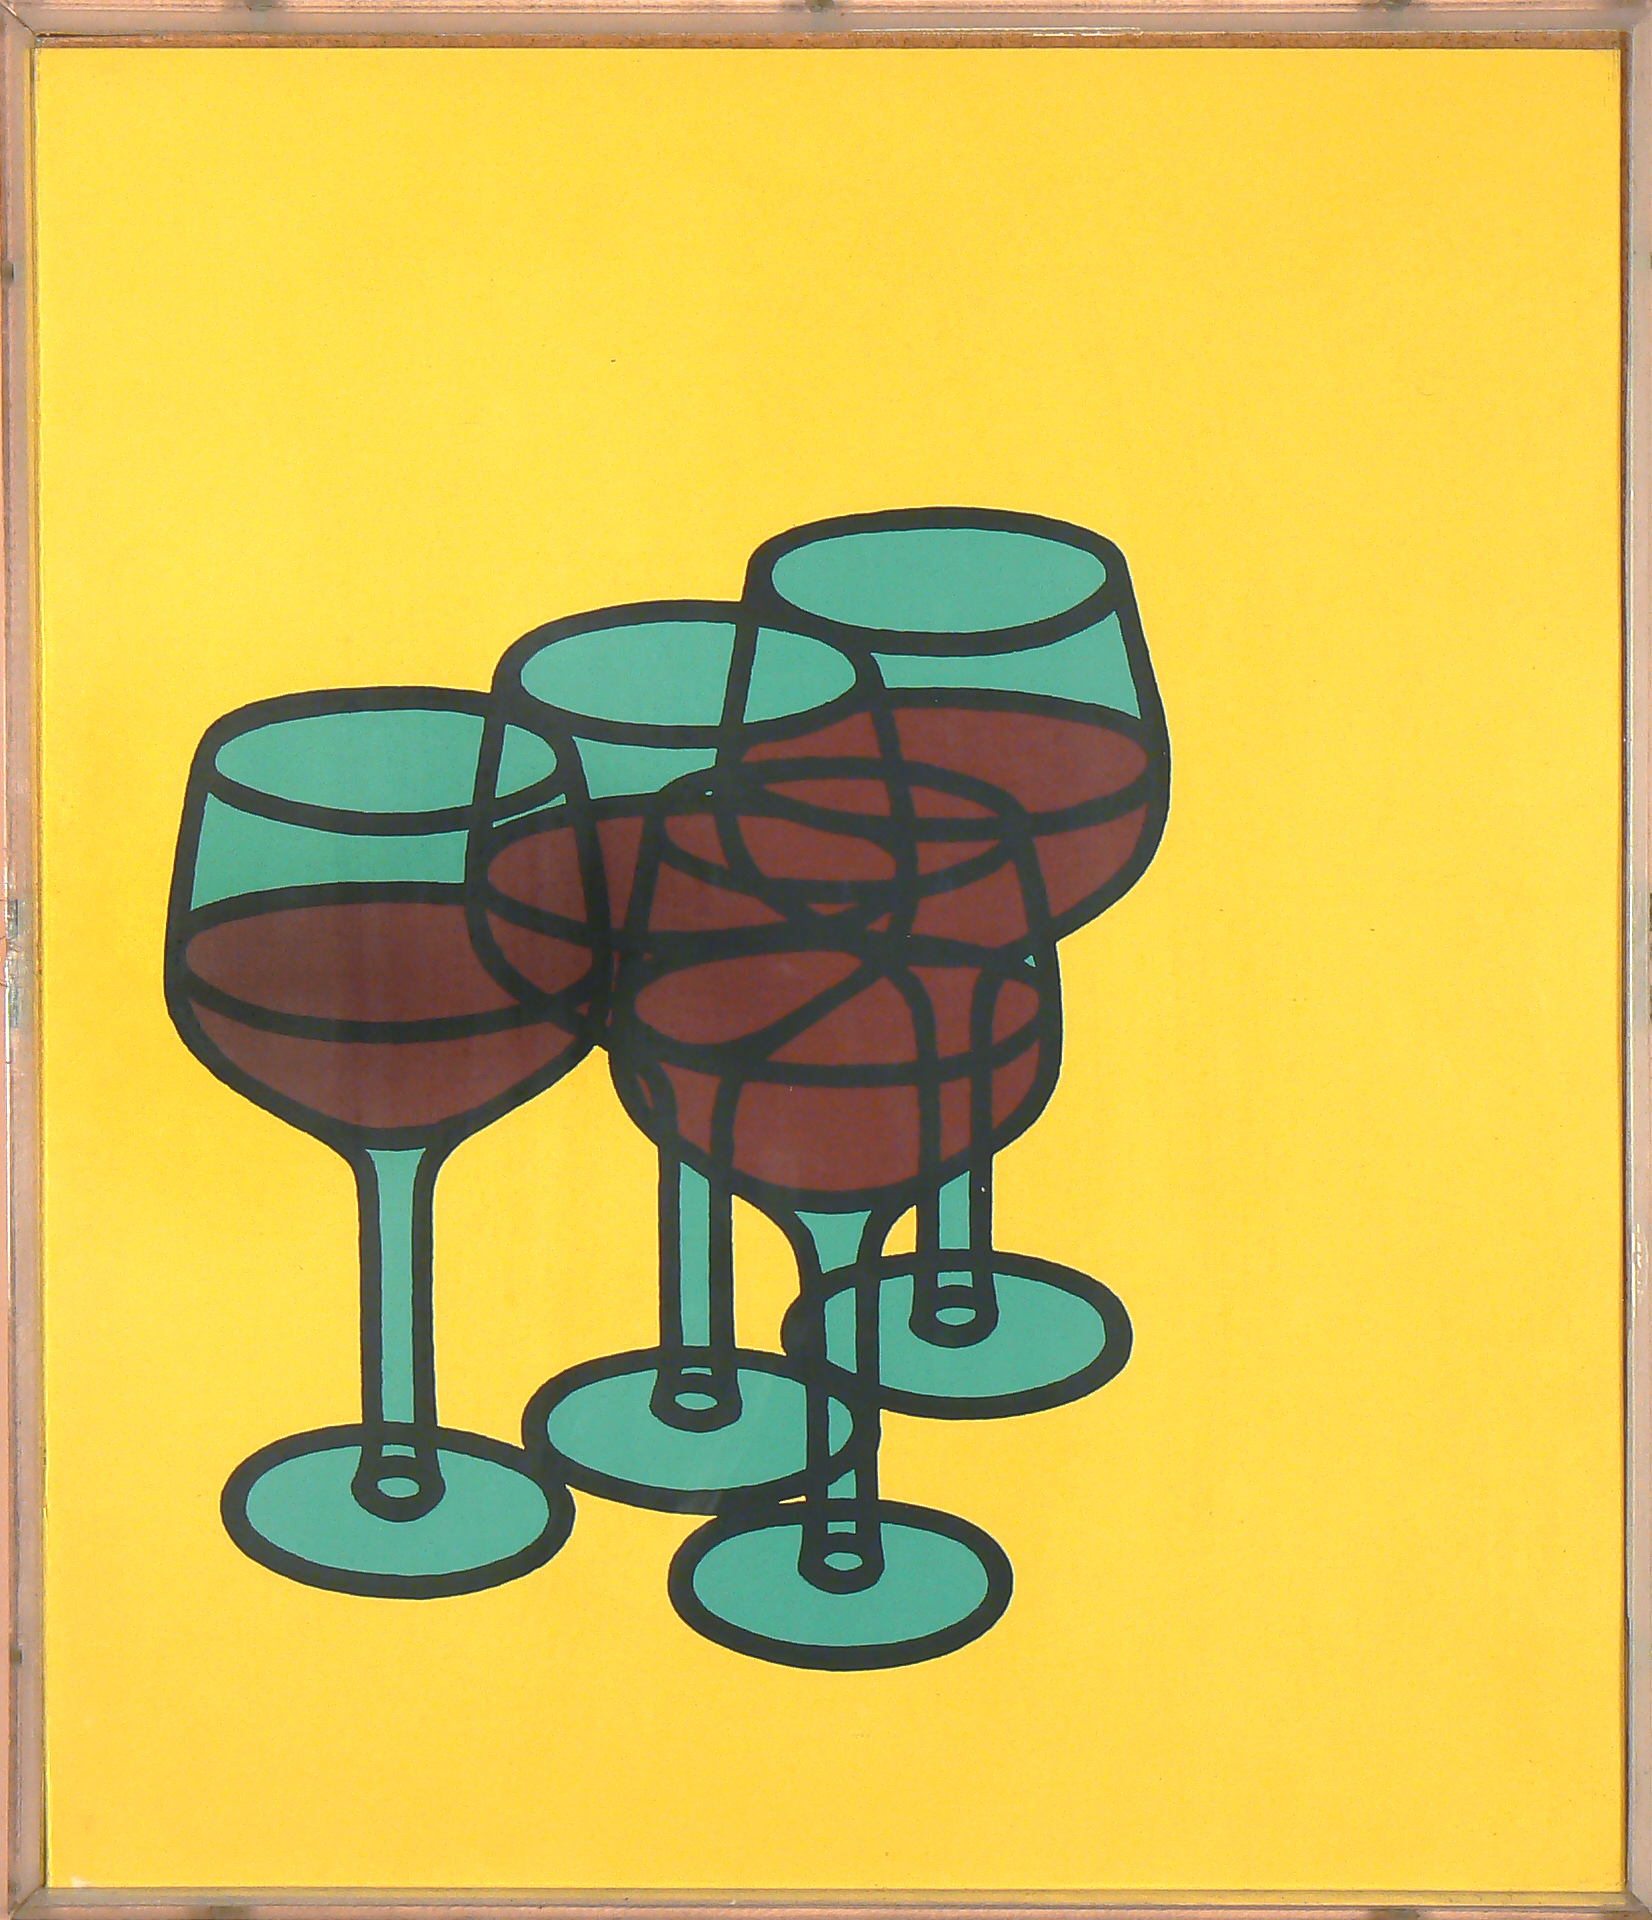 Wineglasses (1969), Caulfield, Patrick (1936 - 2005)